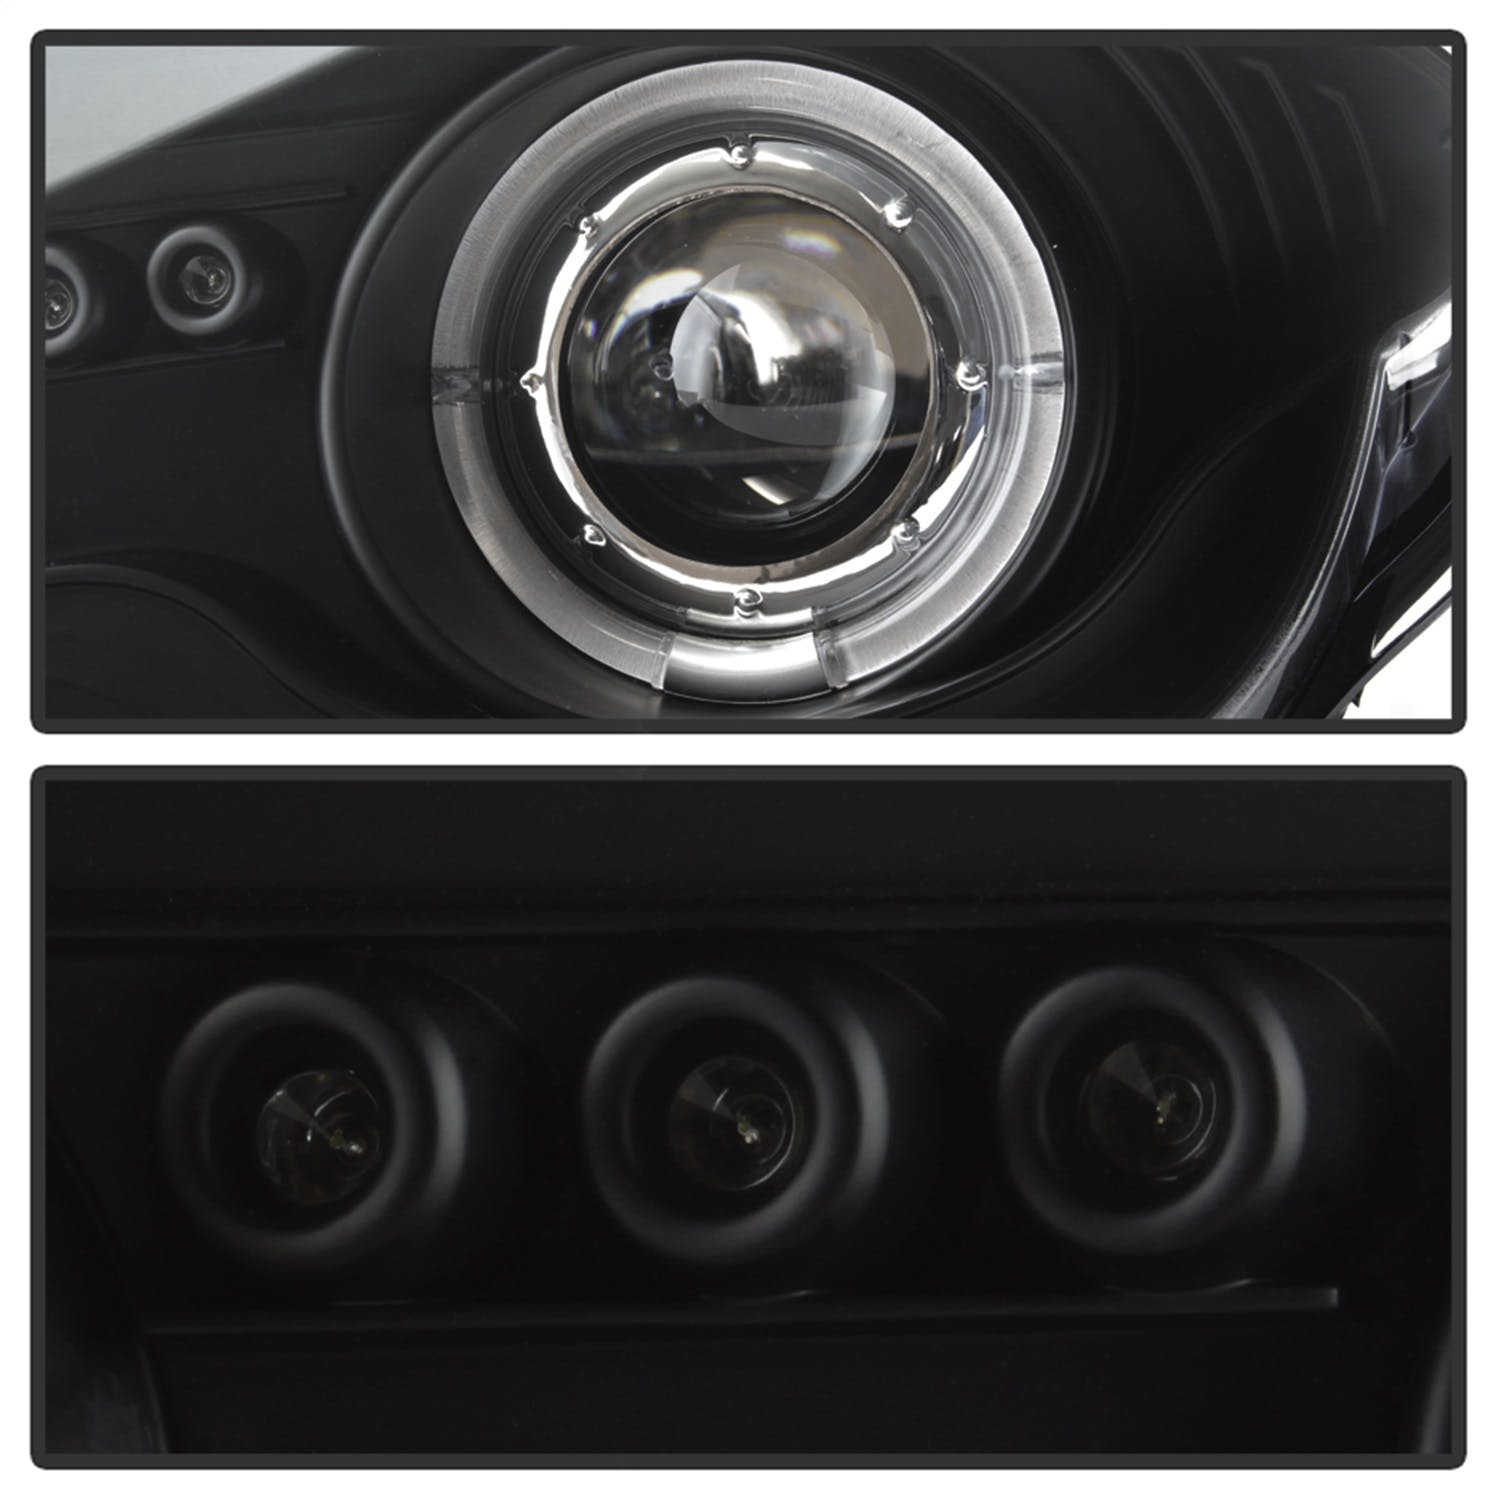 Spyder Auto 5009432 (Spyder) Chrysler 300M 99-04 Projector Headlights-LED Halo-LED ( Replaceable LED